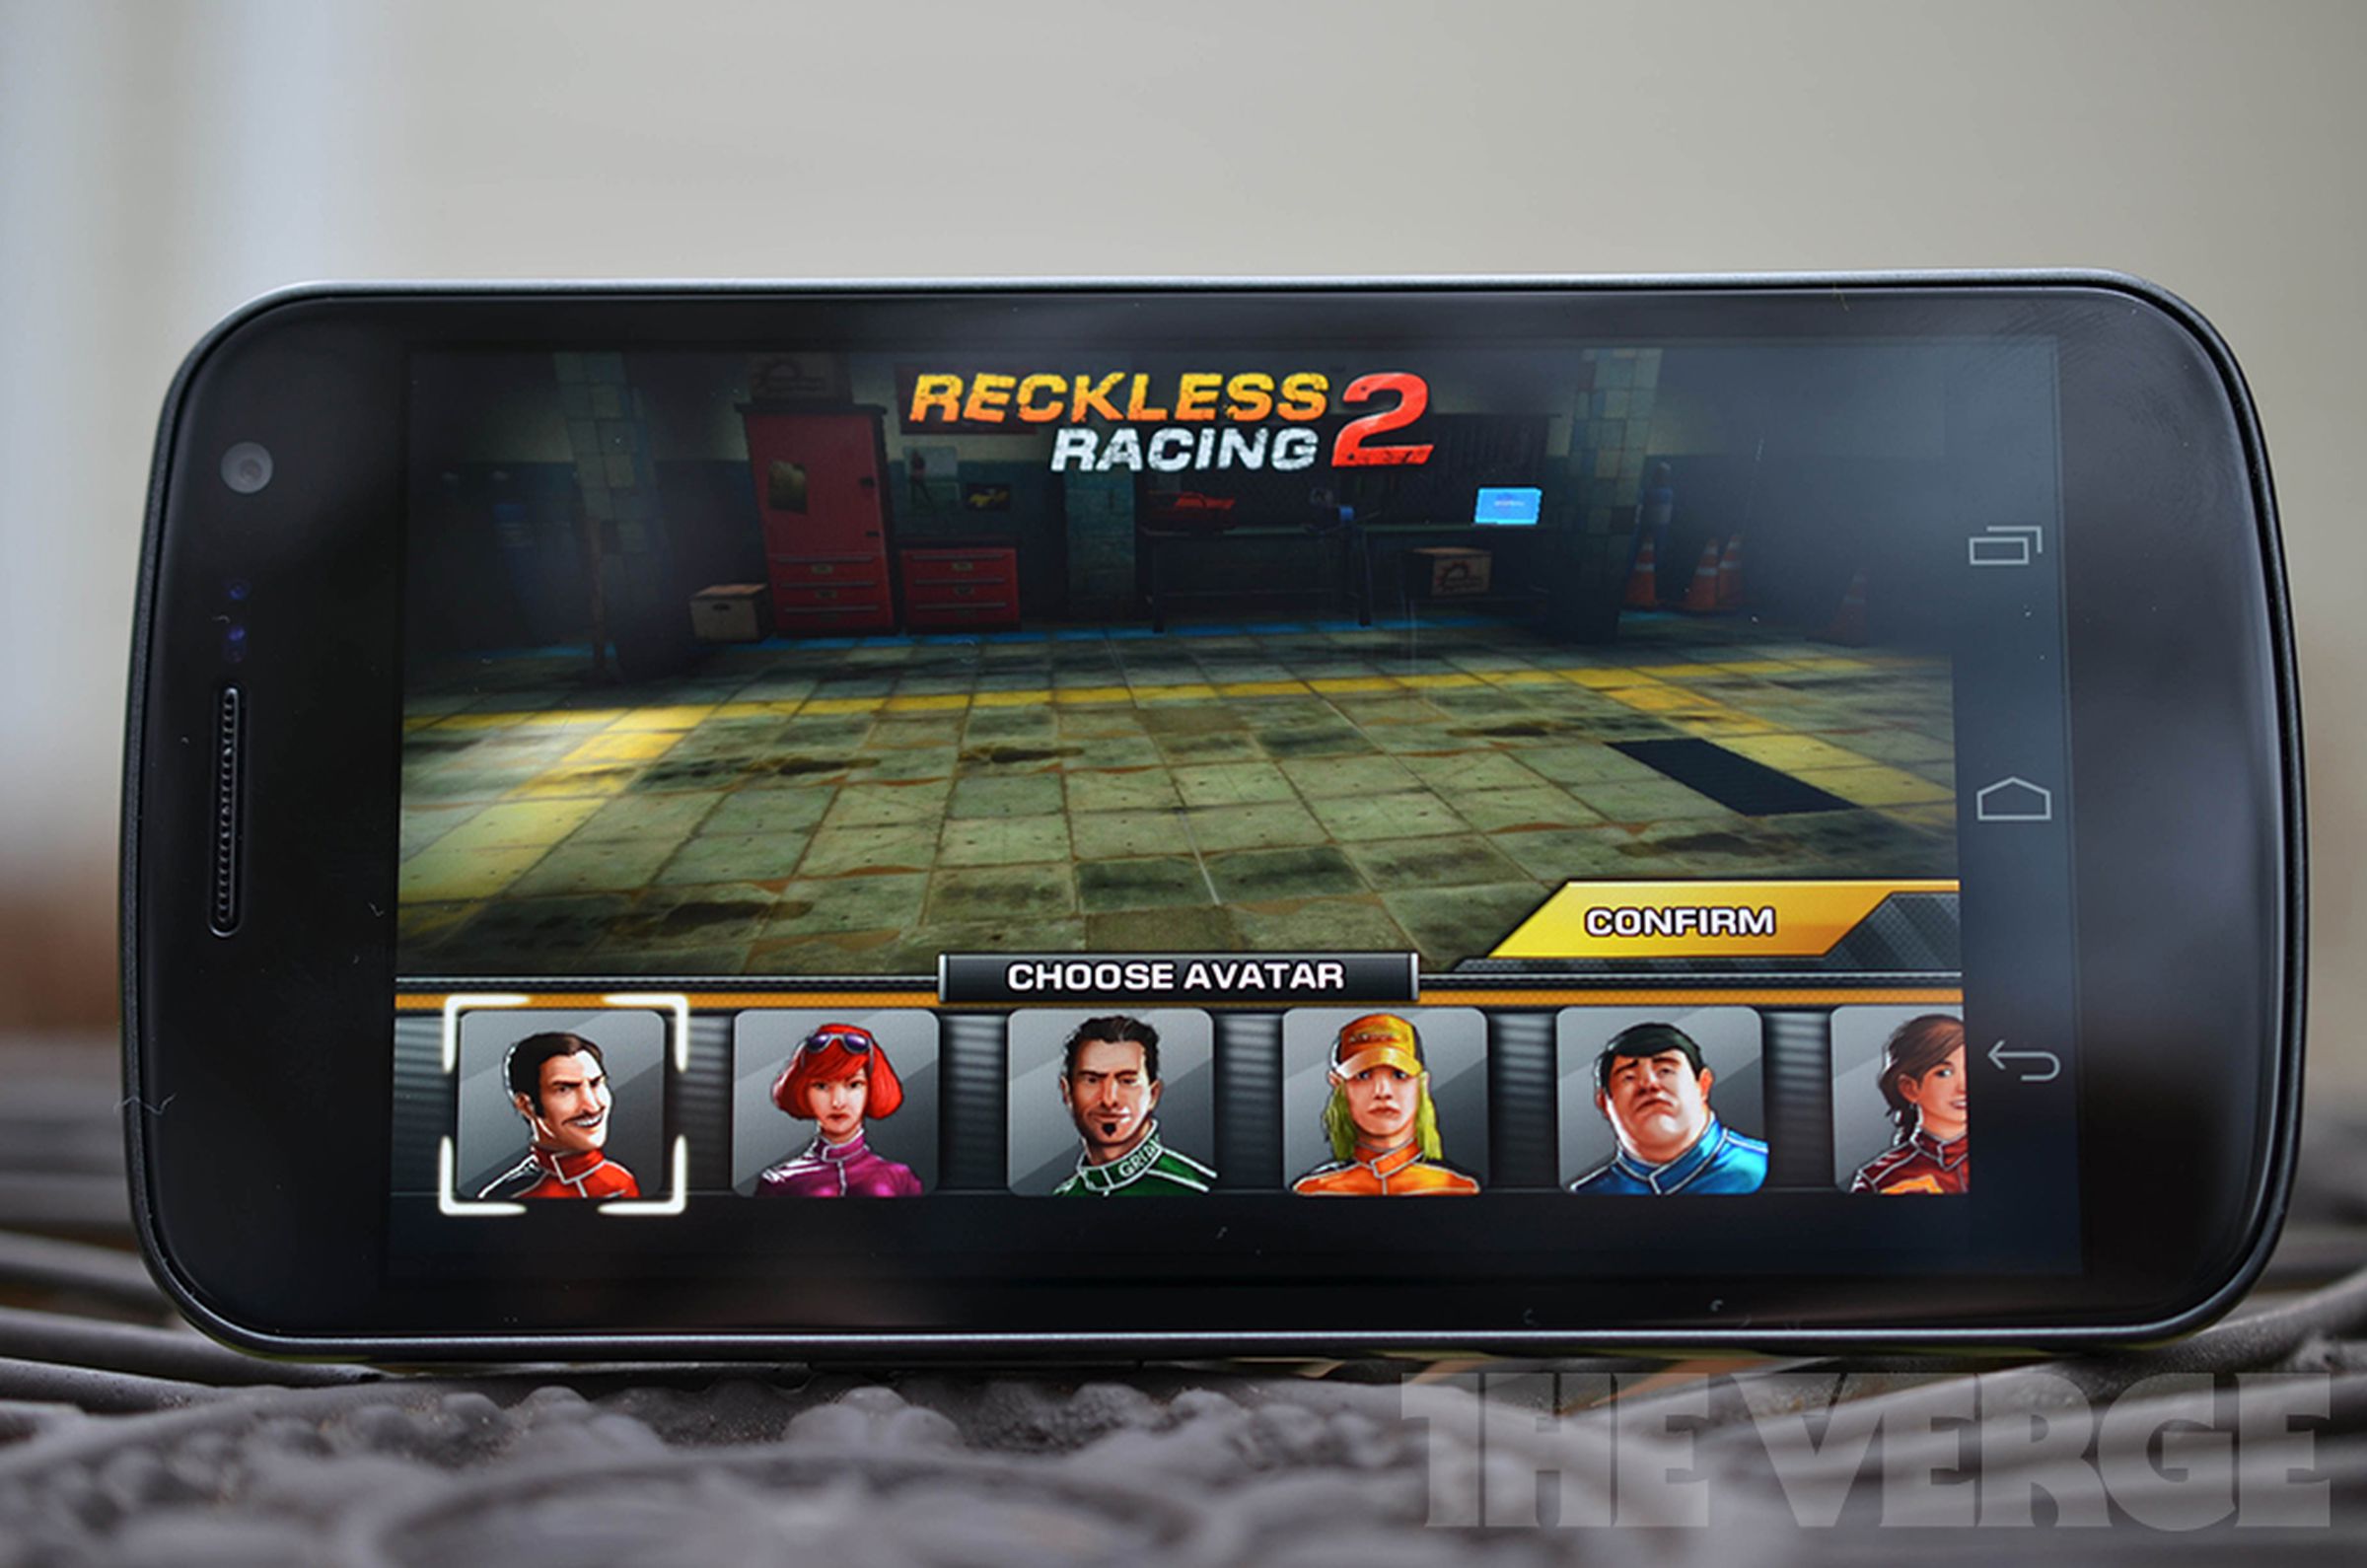 Reckless Racing 2 (hands-on photos)